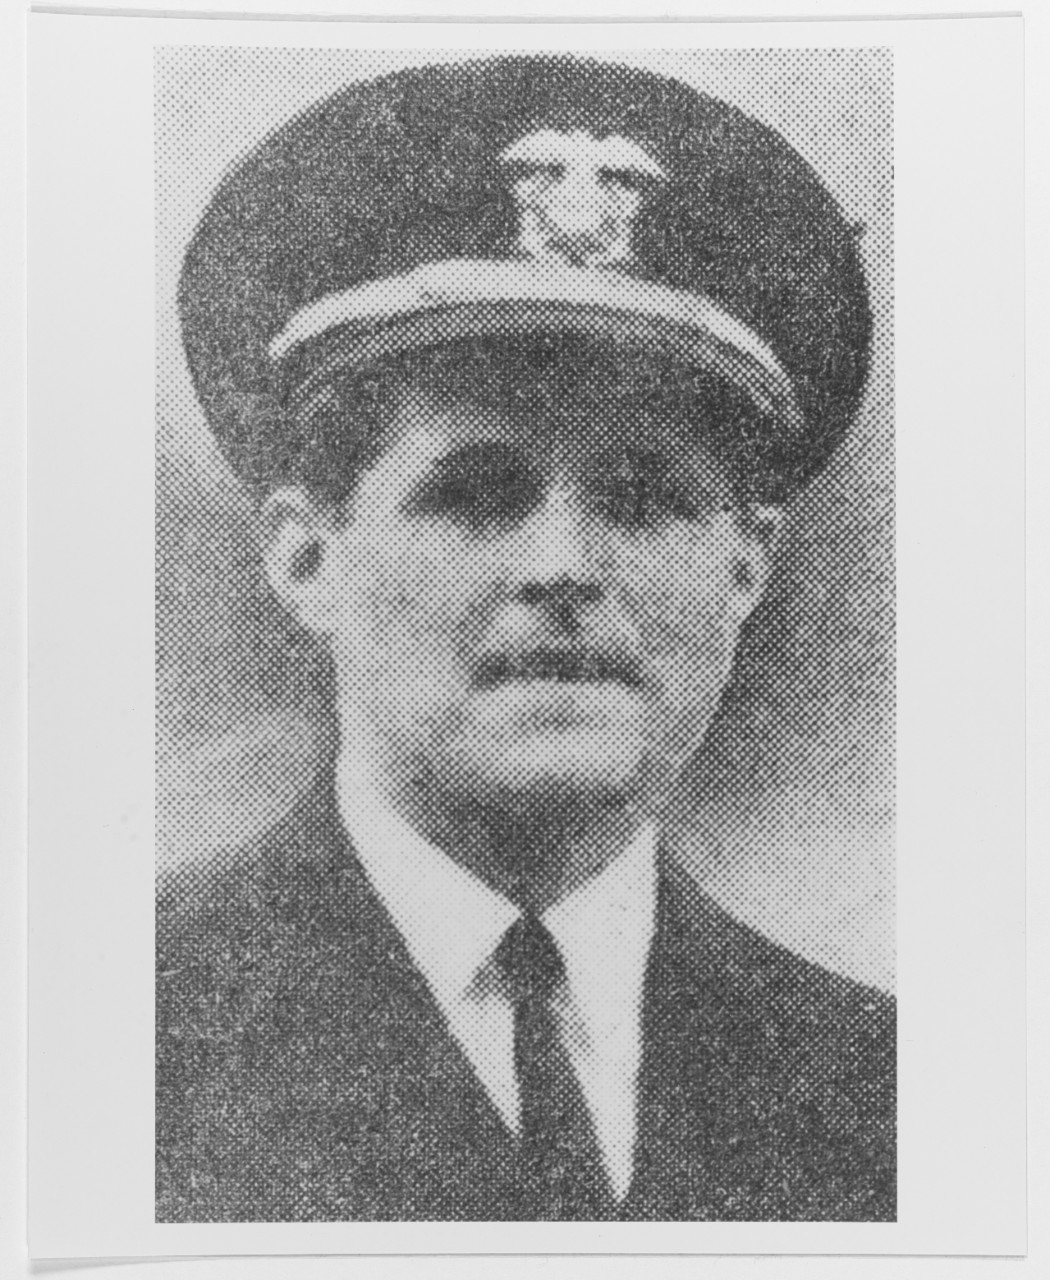 Lieutenant Joseph P. Kennedy, Jr.